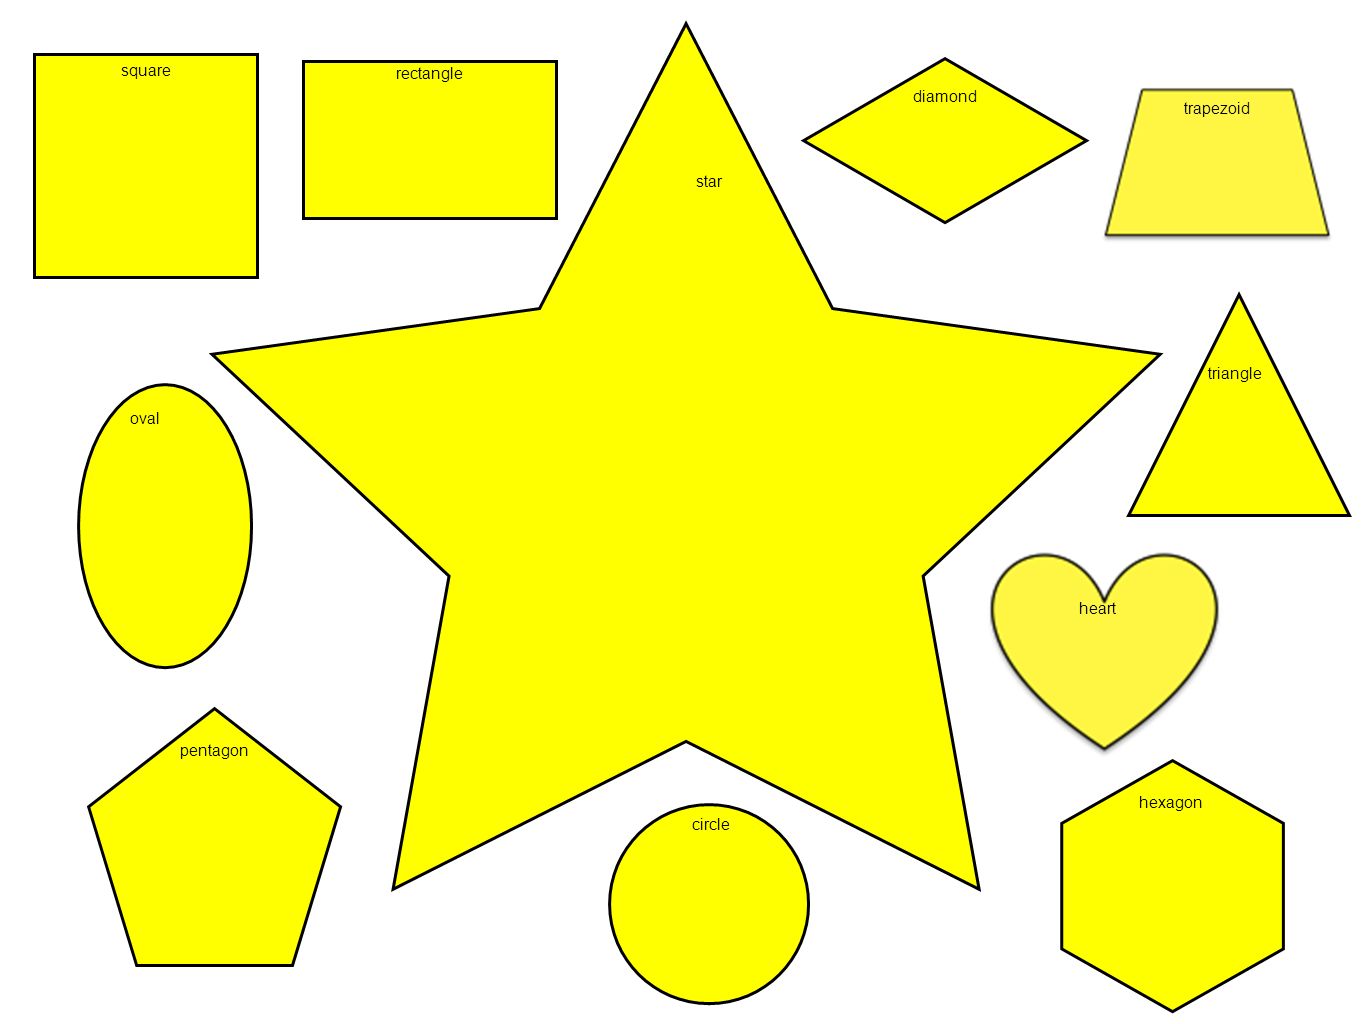 square rectangle triangle diamond trapezoid pentagon hexagon circle oval heart star